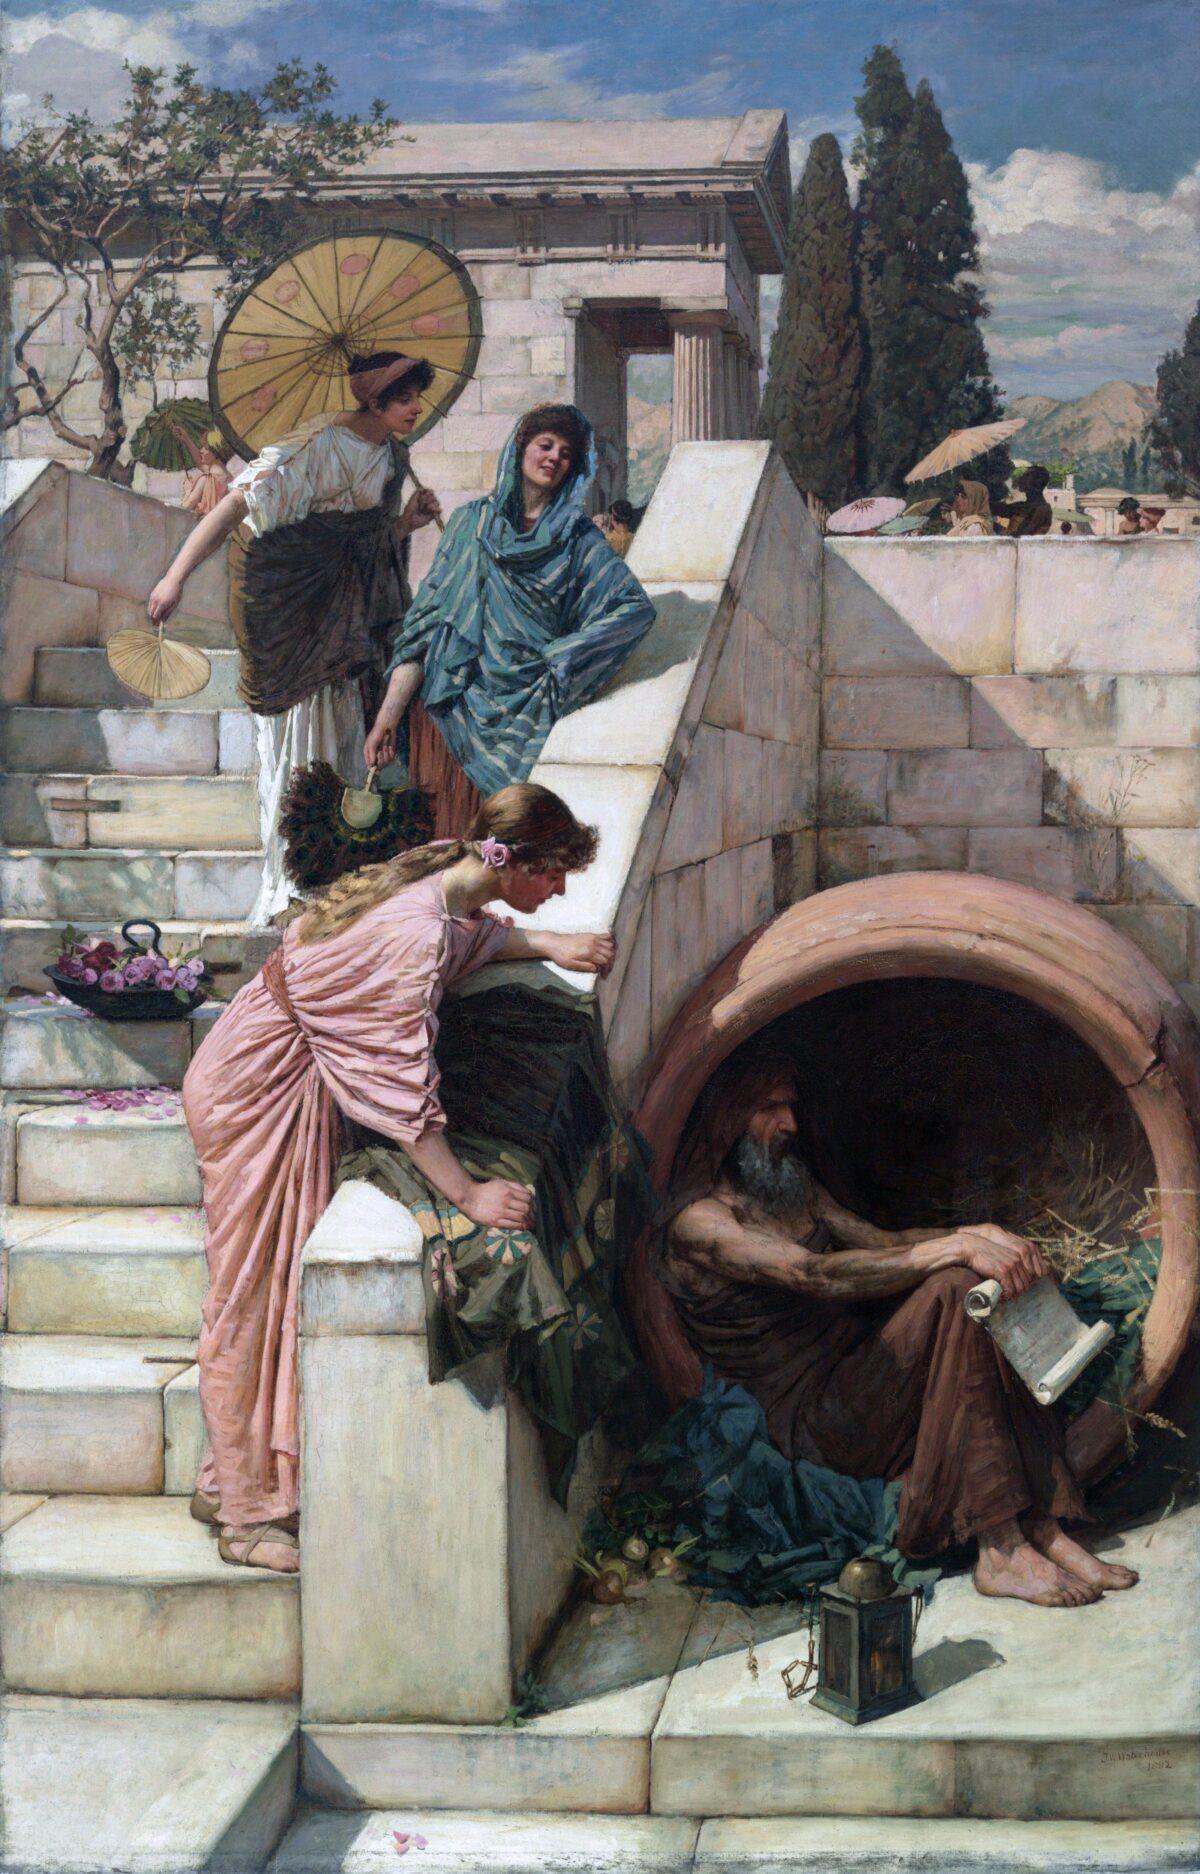 Tranh vẽ Diogenes của John William Waterhouse - Diogenes là ai?